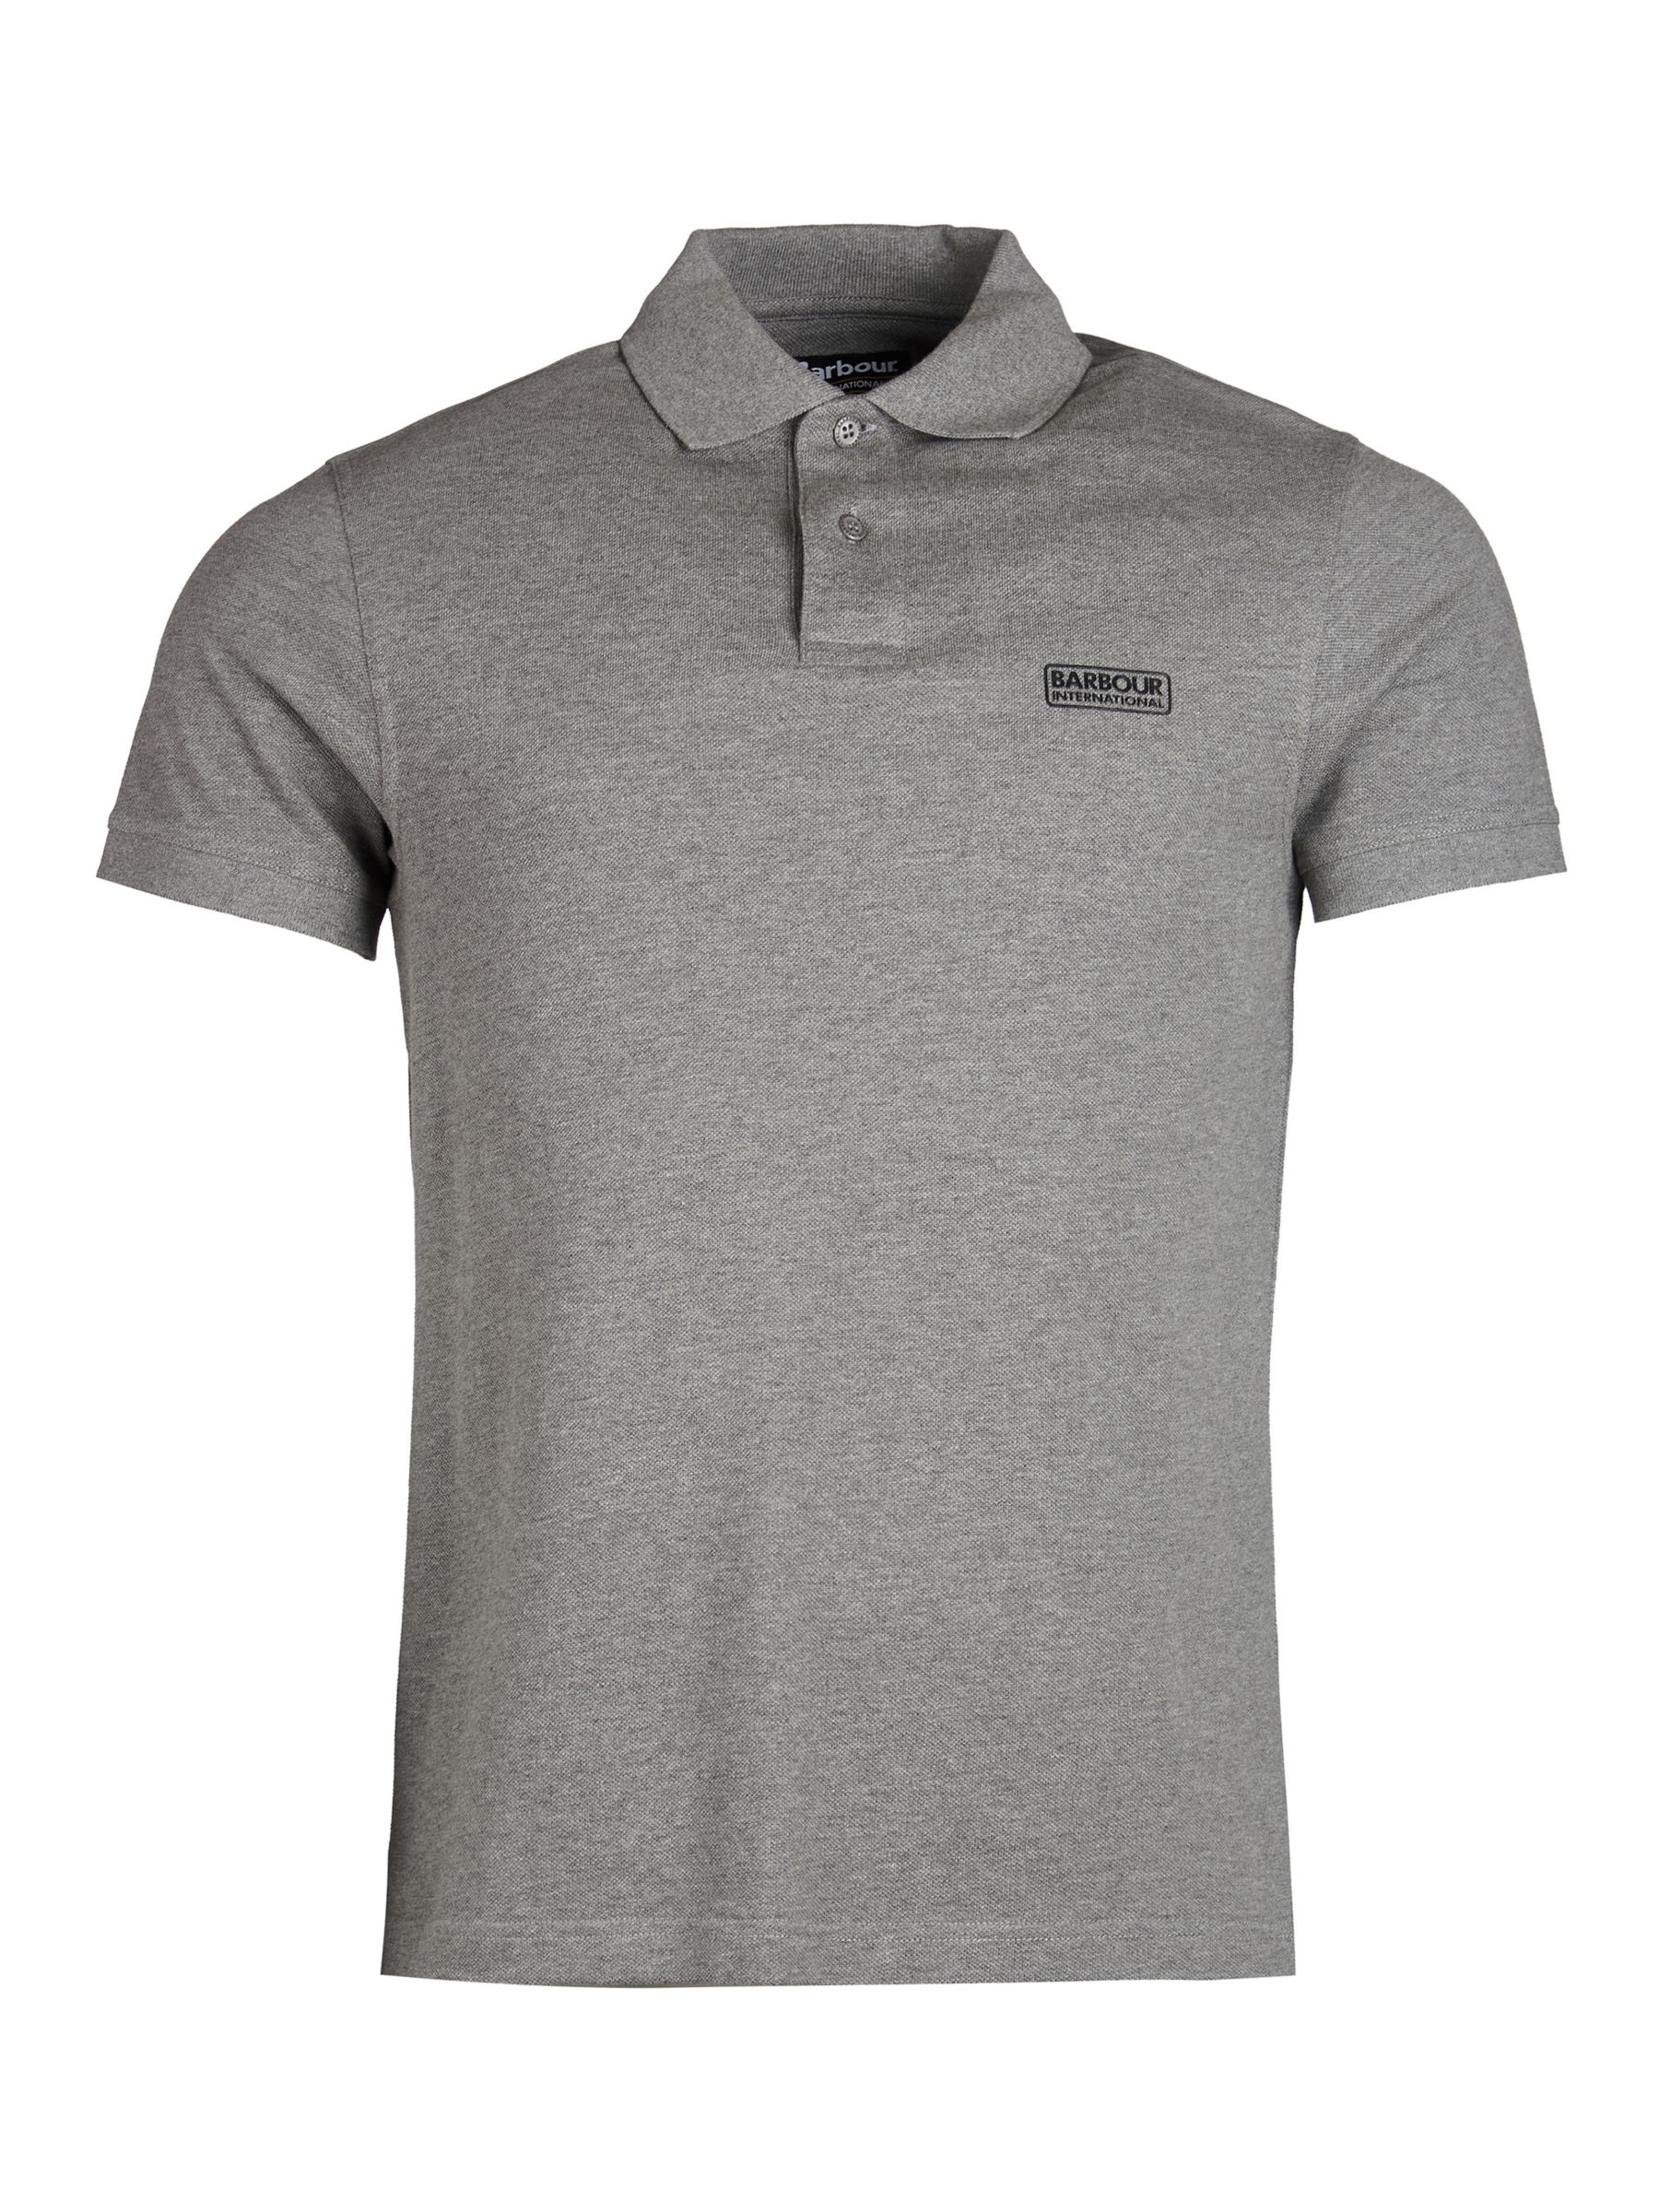 Barbour International Polo Shirt, Grey 